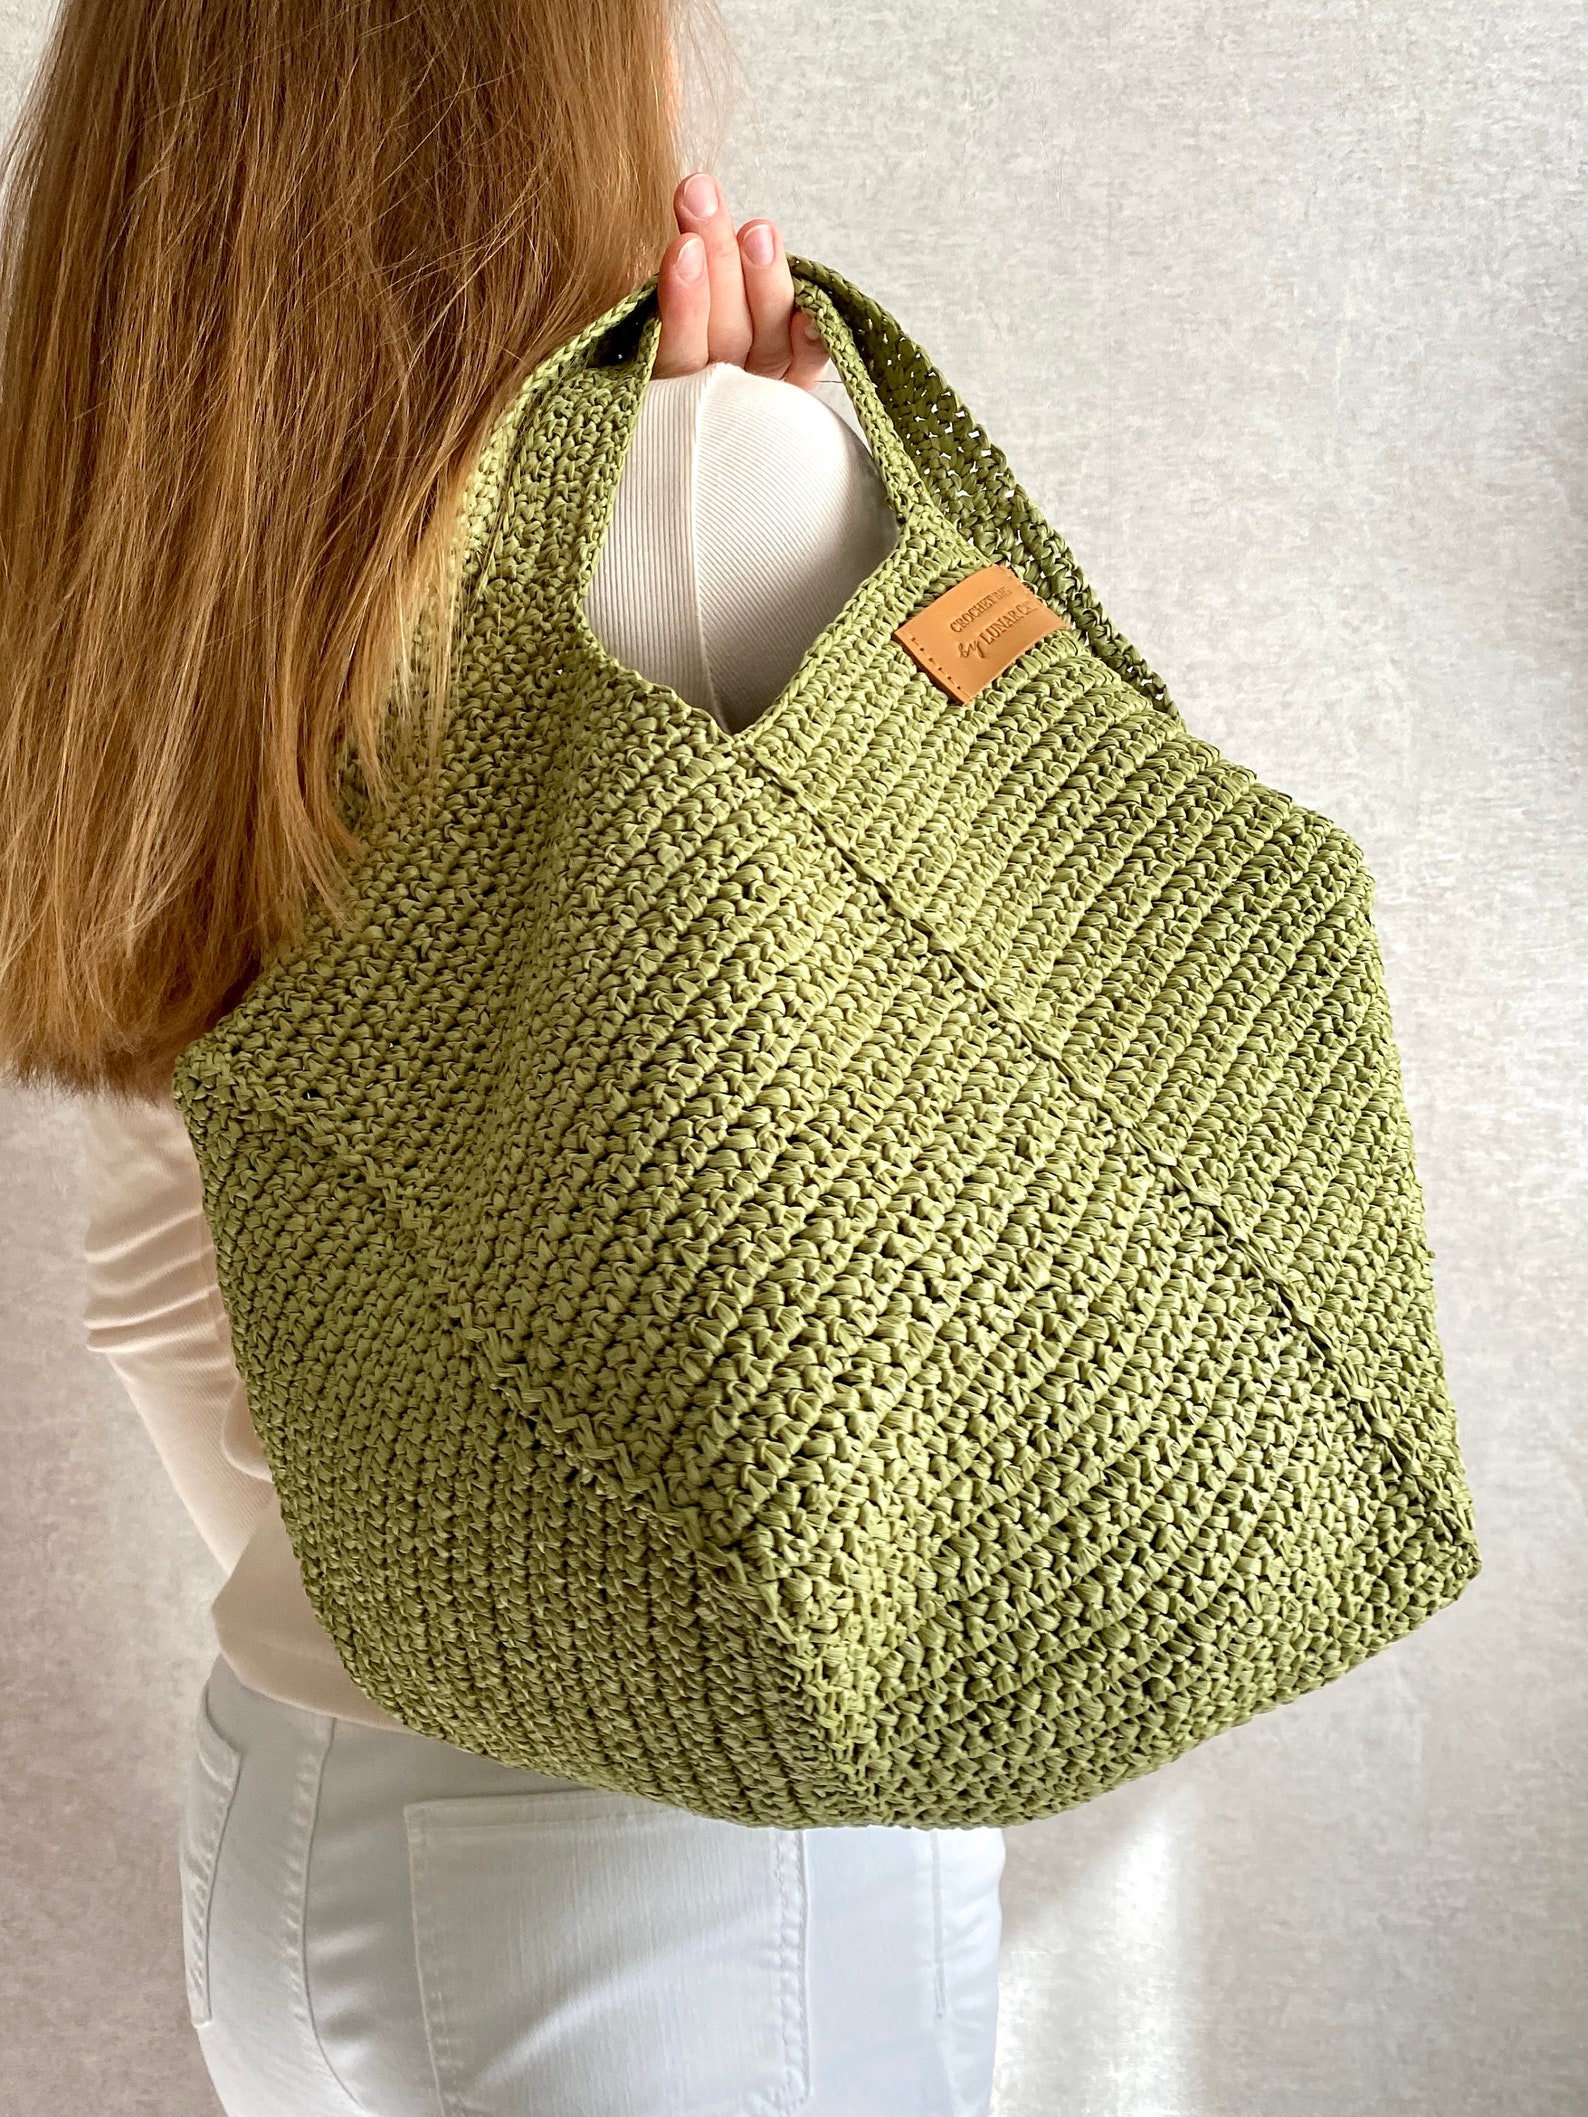 Crochet Raffia Bag Pattern Raffia Beach Bag Crochet Pattern - Etsy